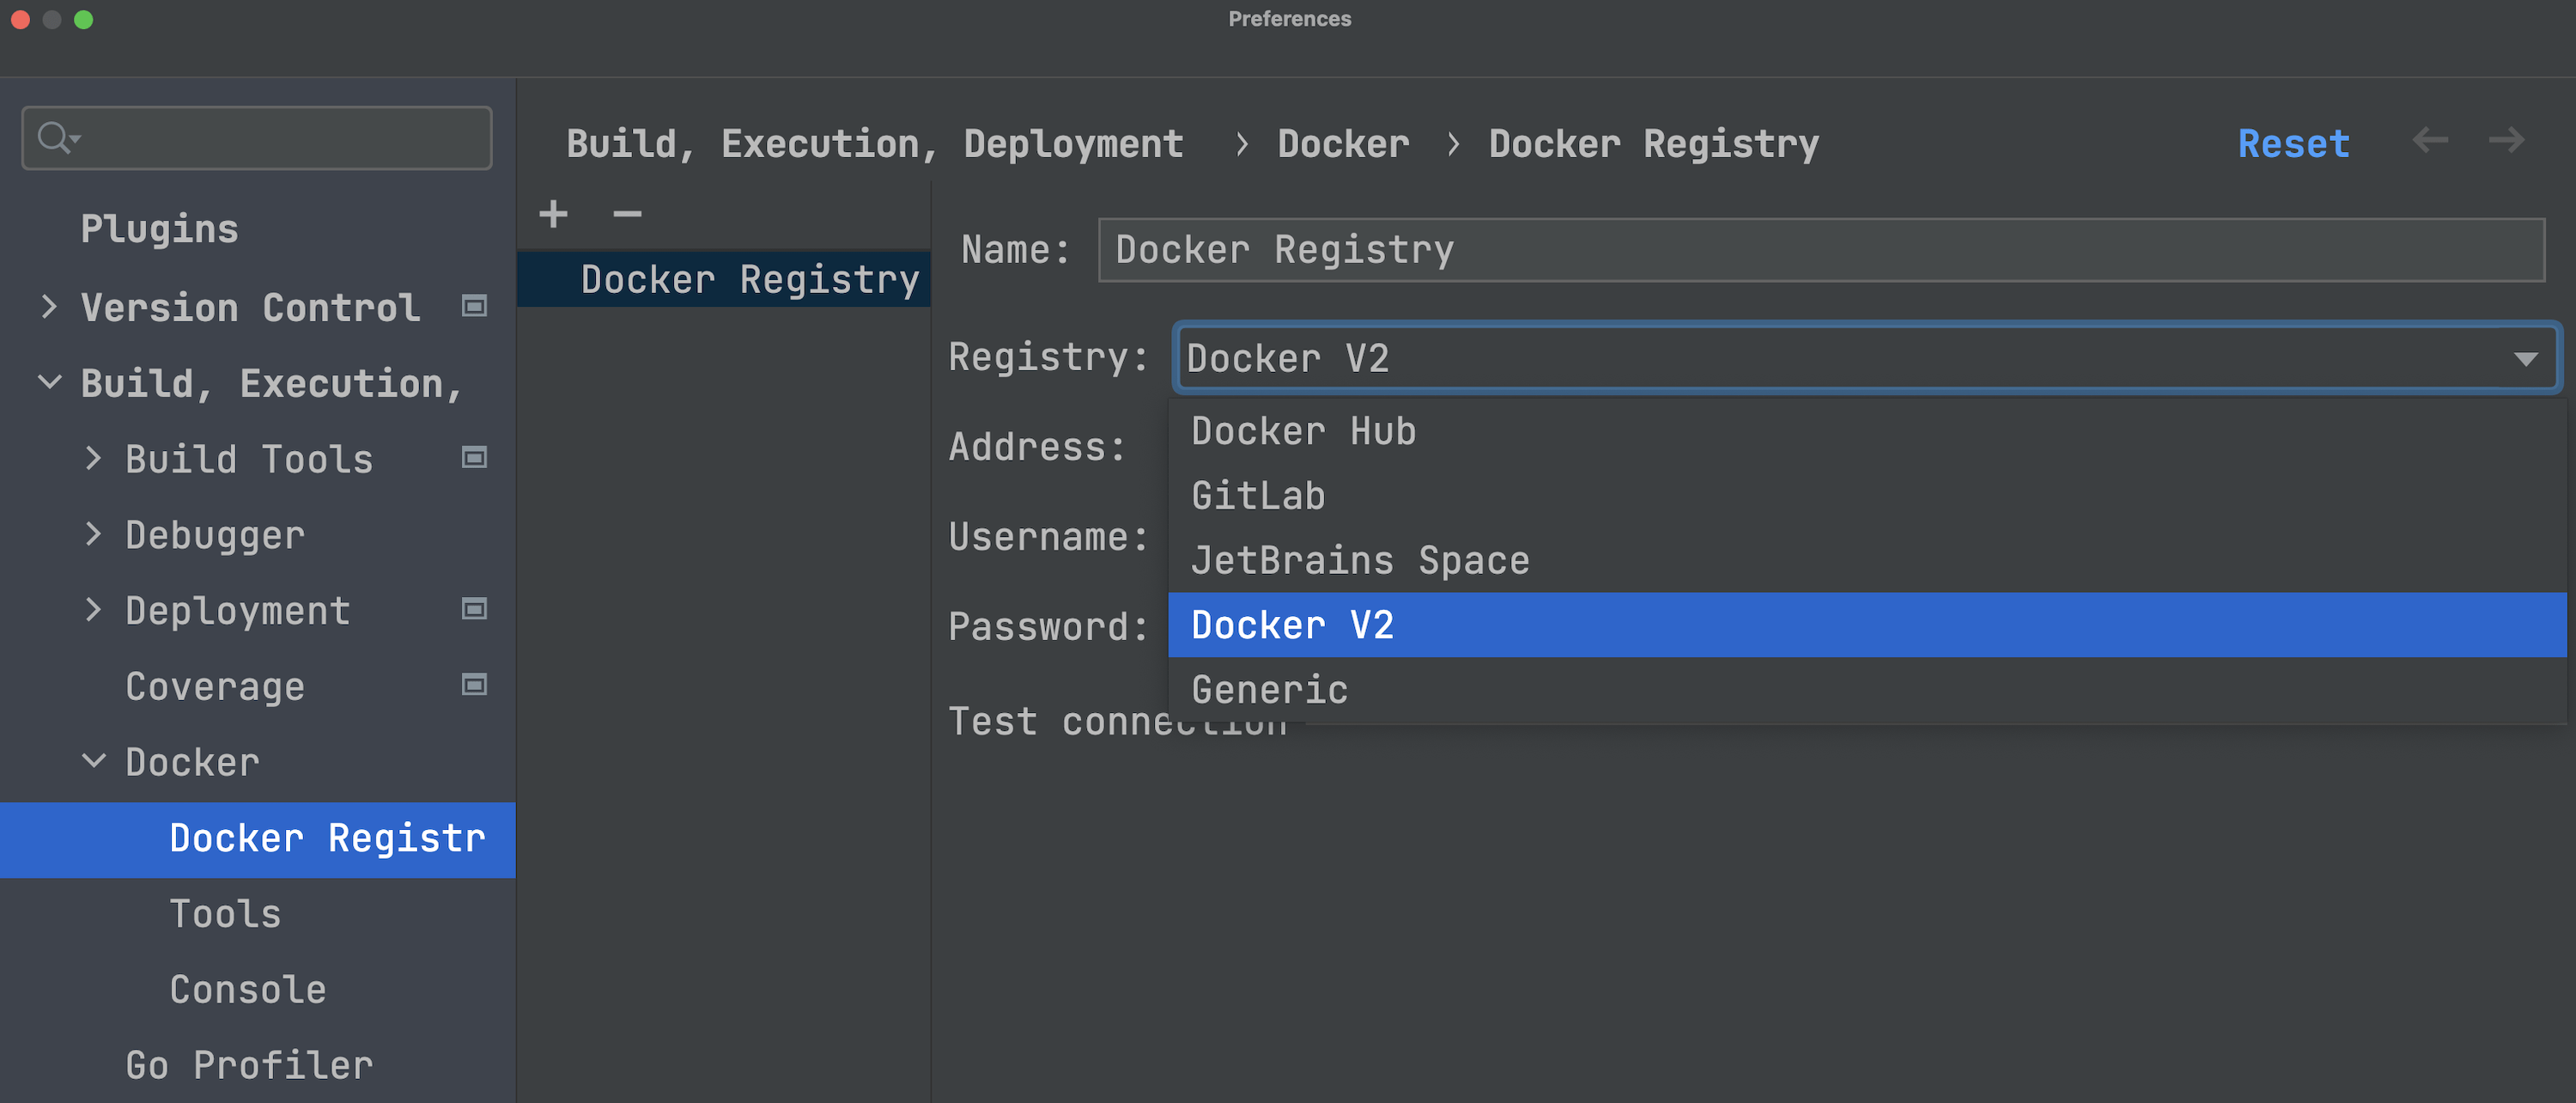 Docker V2 accessible in the Docker Registry settings.